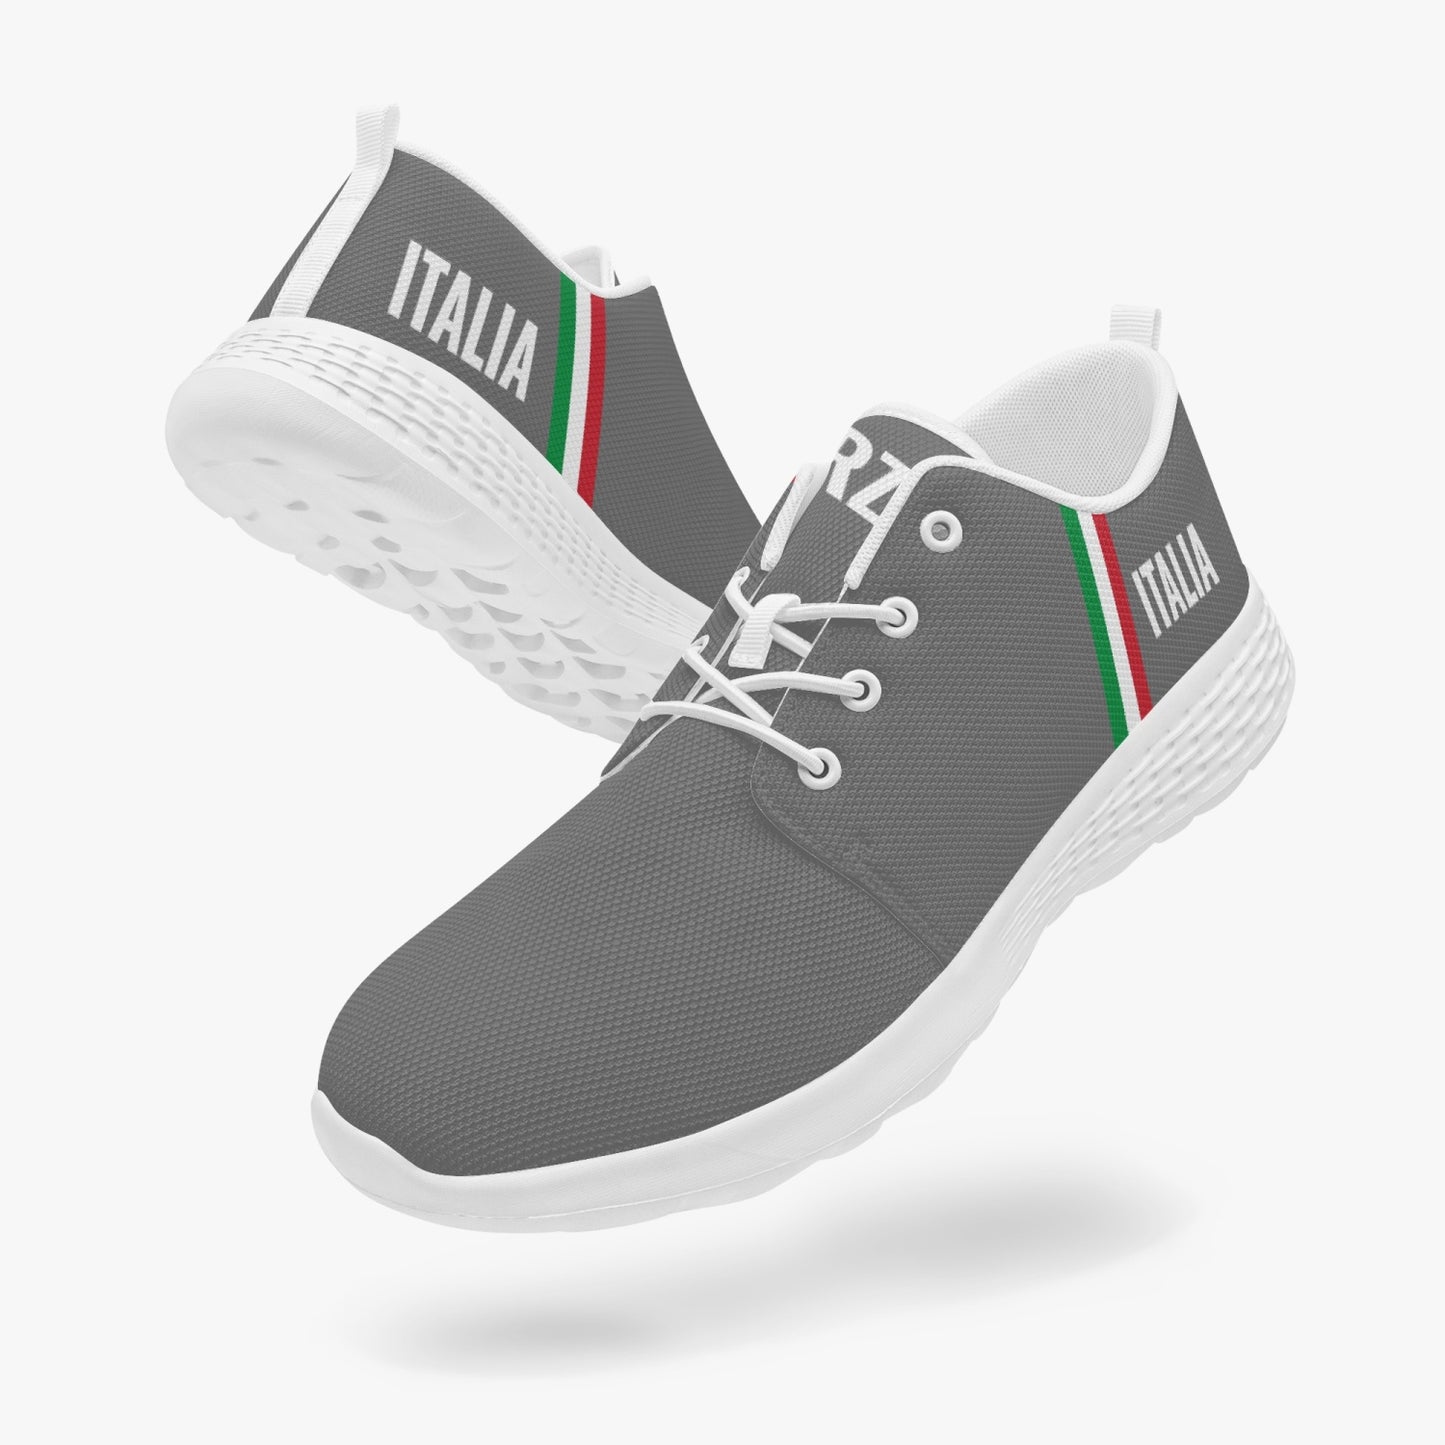 Italy Running Shoes - Forza Italia - Grey - men's /women's sizes